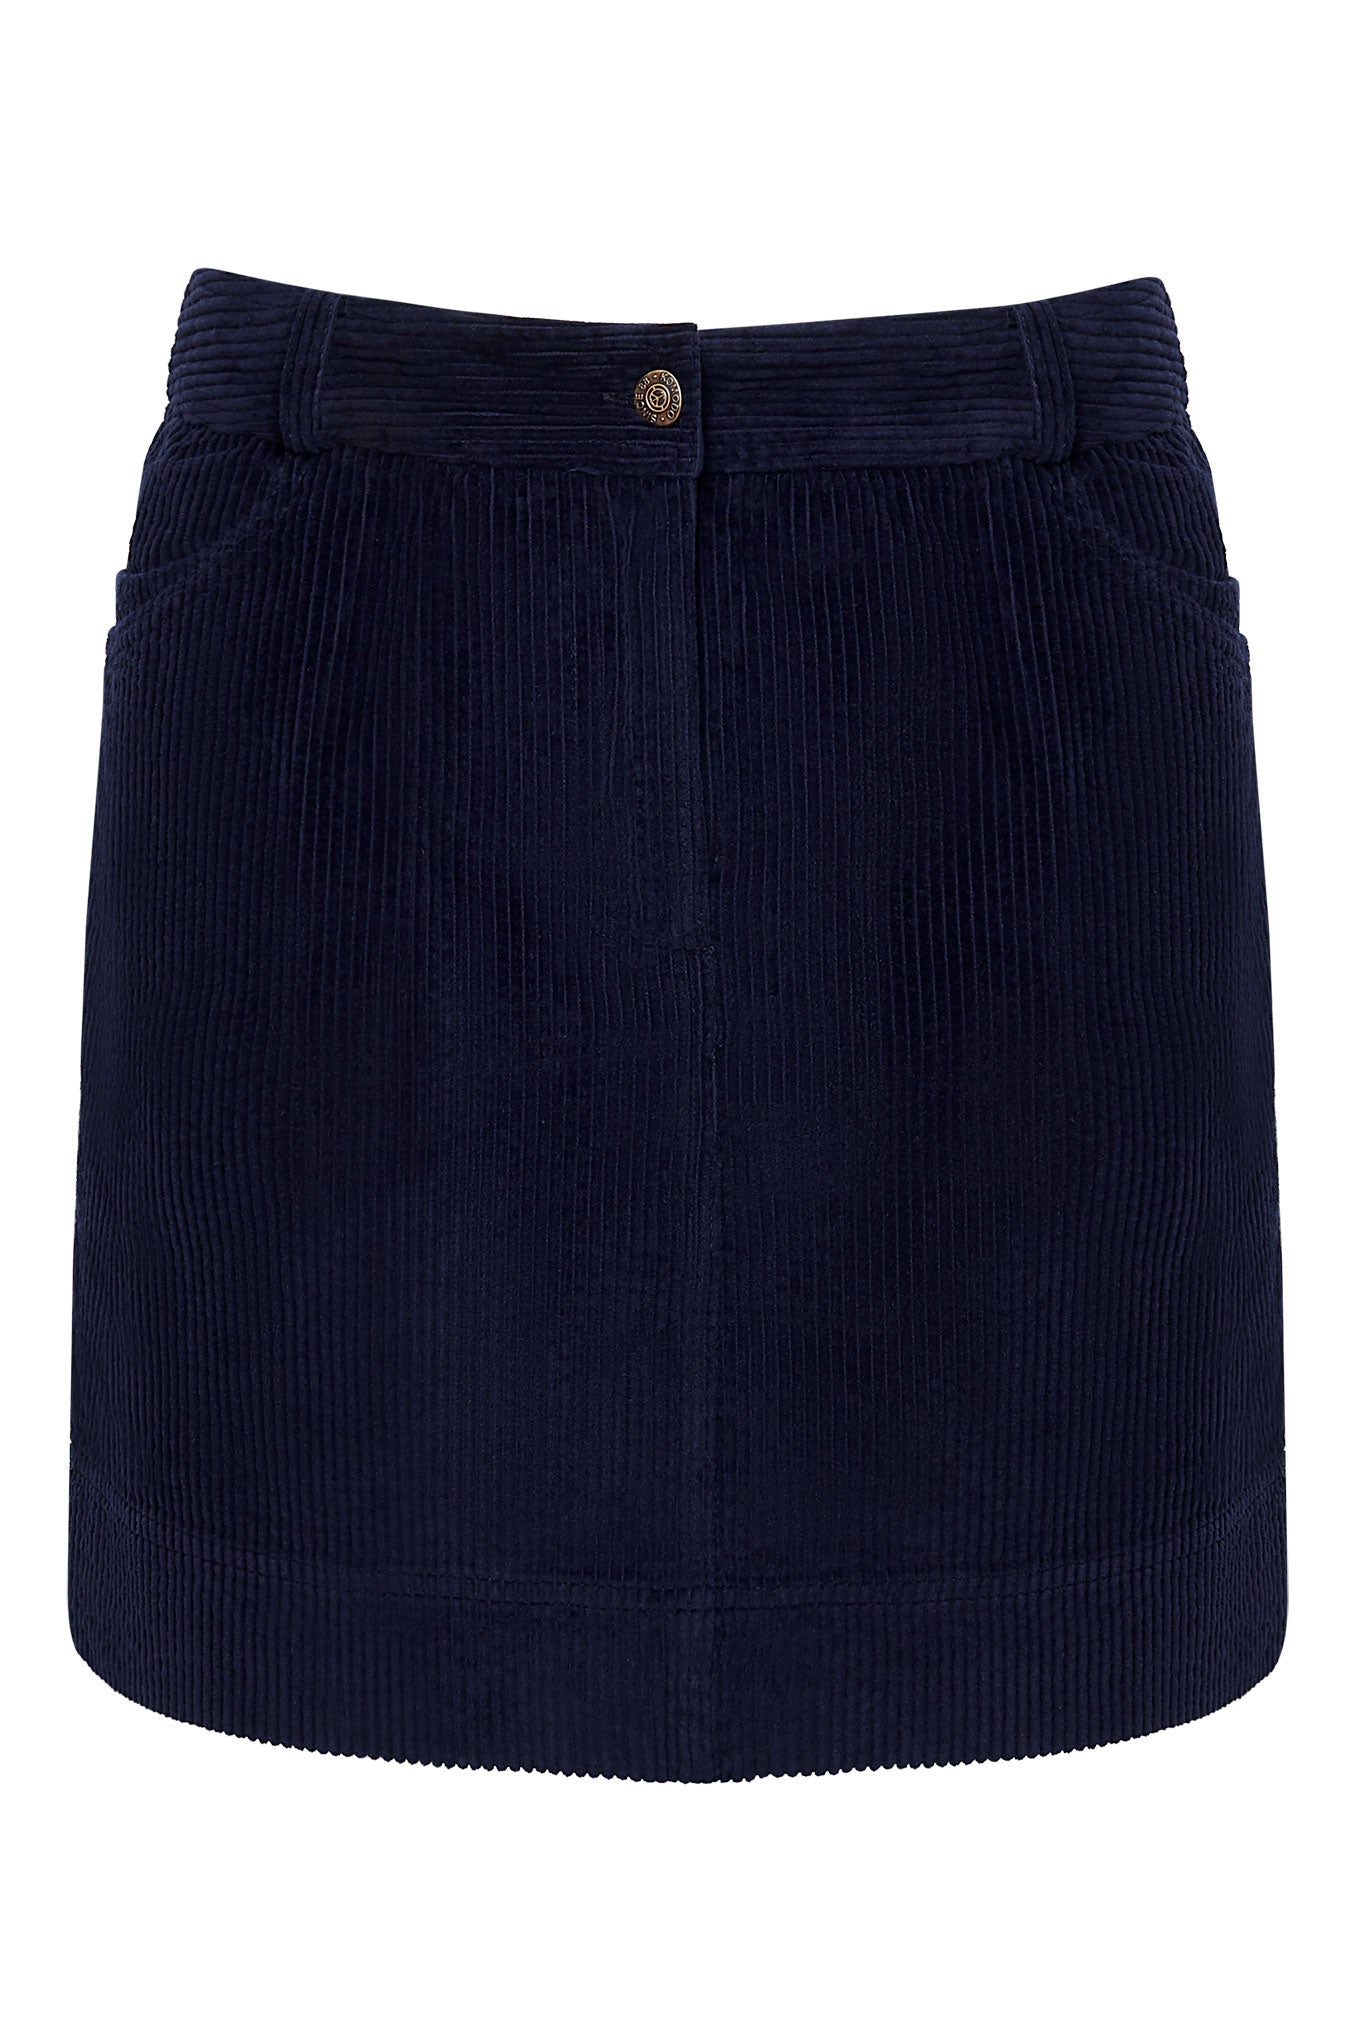 Black corduroy mini skirt LEONI made from 100% organic cotton from Komodo